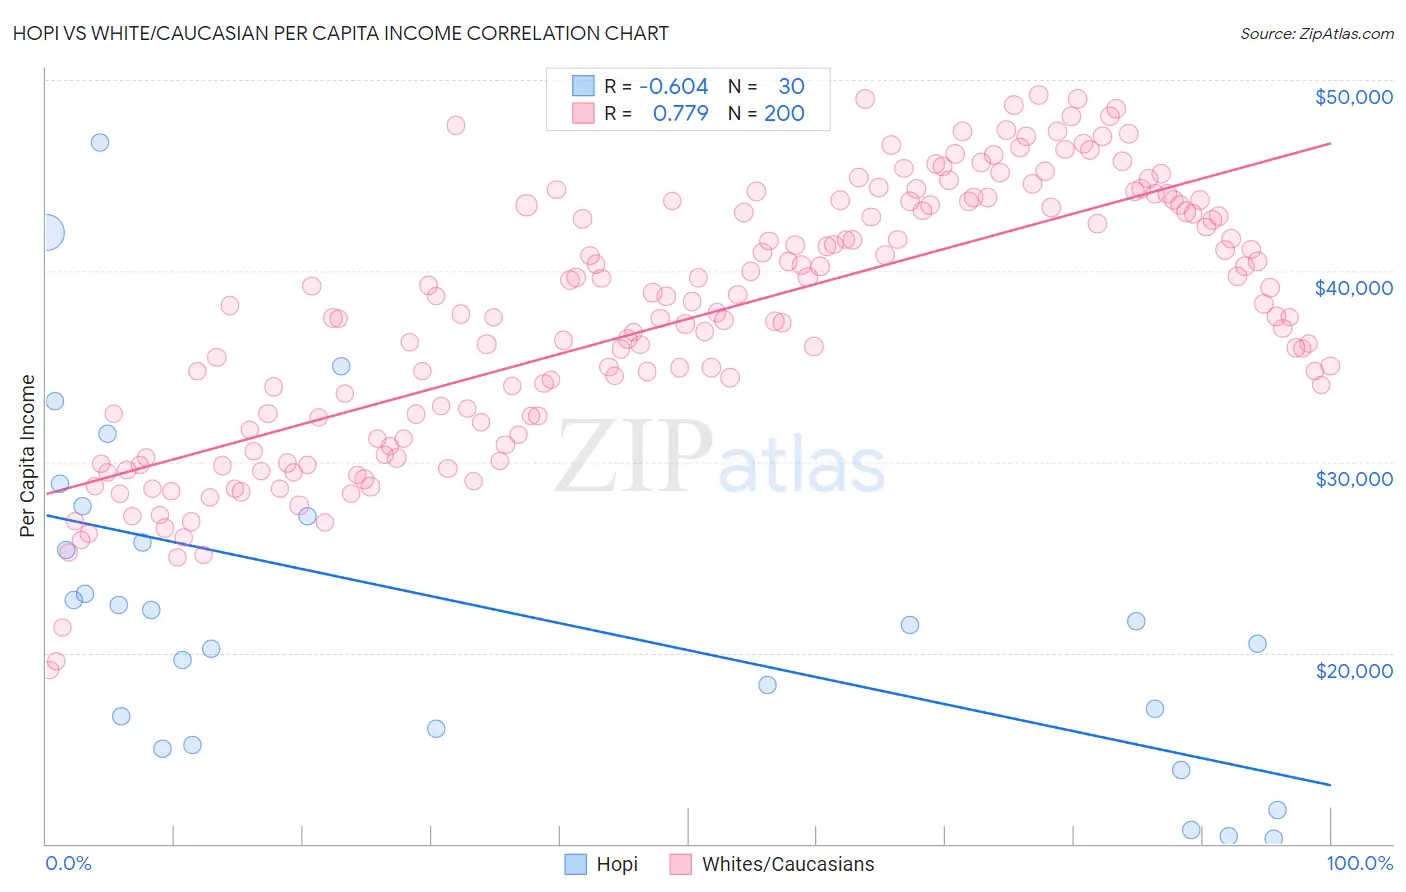 Hopi vs White/Caucasian Per Capita Income